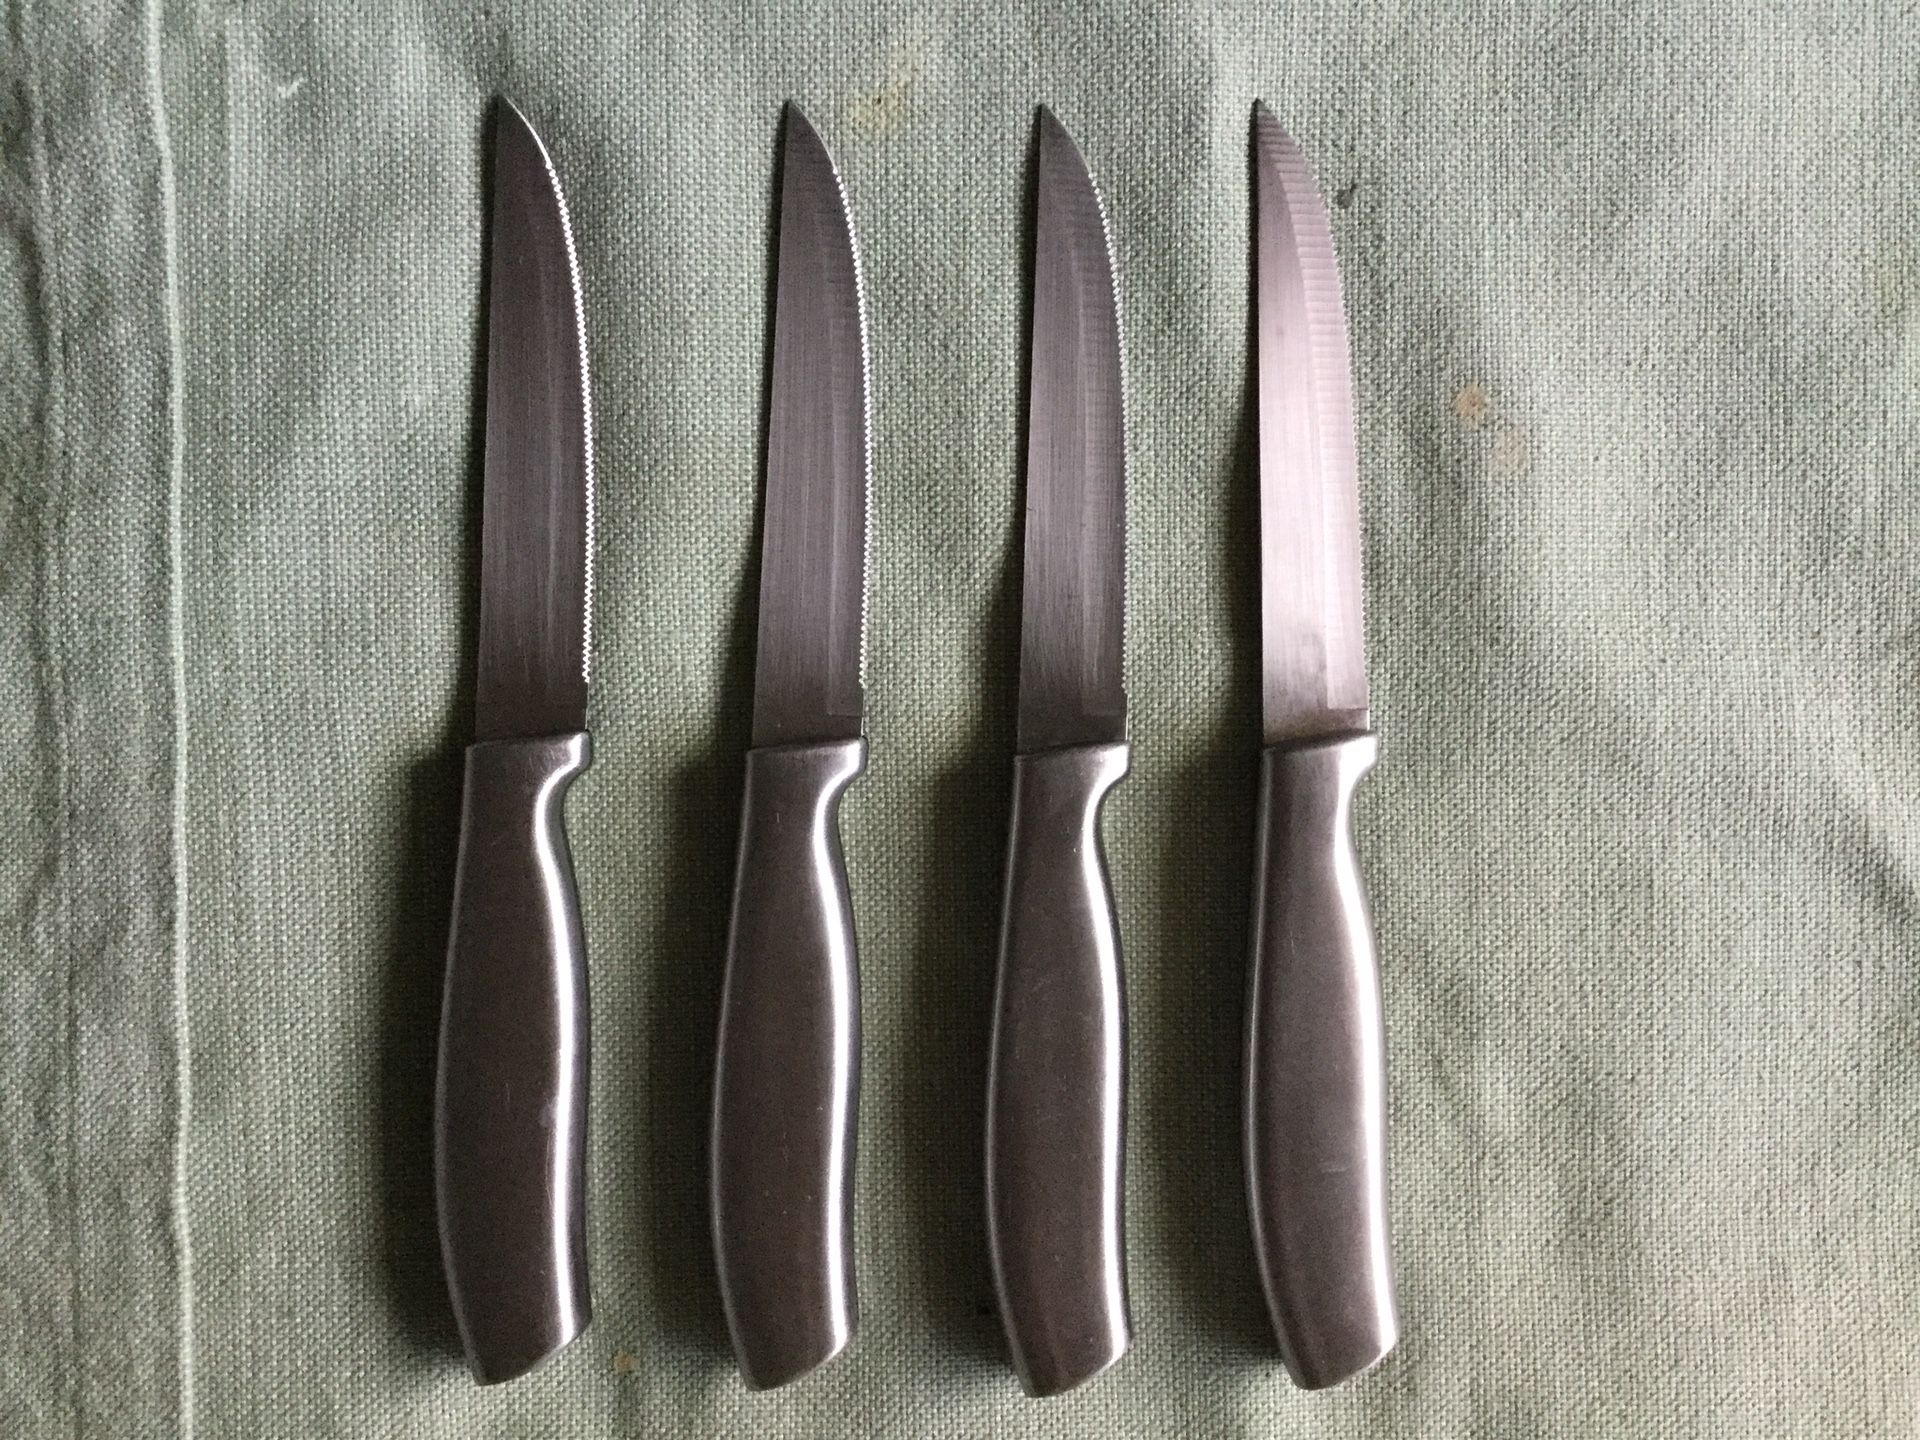 Schmidt Brothers Carbon Steak Knives Set for Sale in Artesia, CA - OfferUp